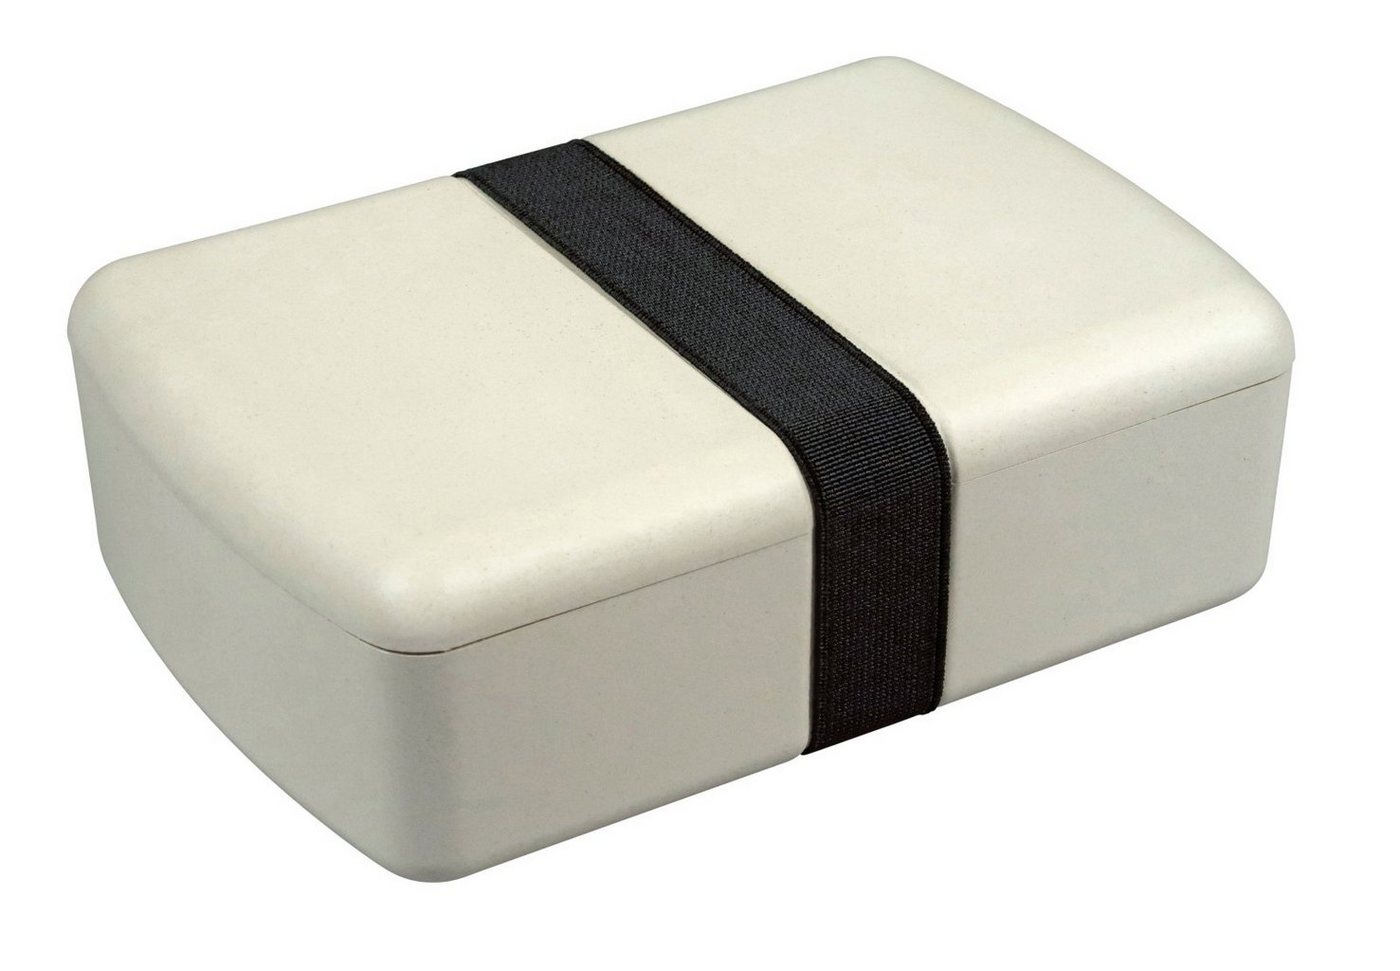 Capventure Lunchbox Zuperzozial Brotdose TIME-OUT-BOX von Capventure